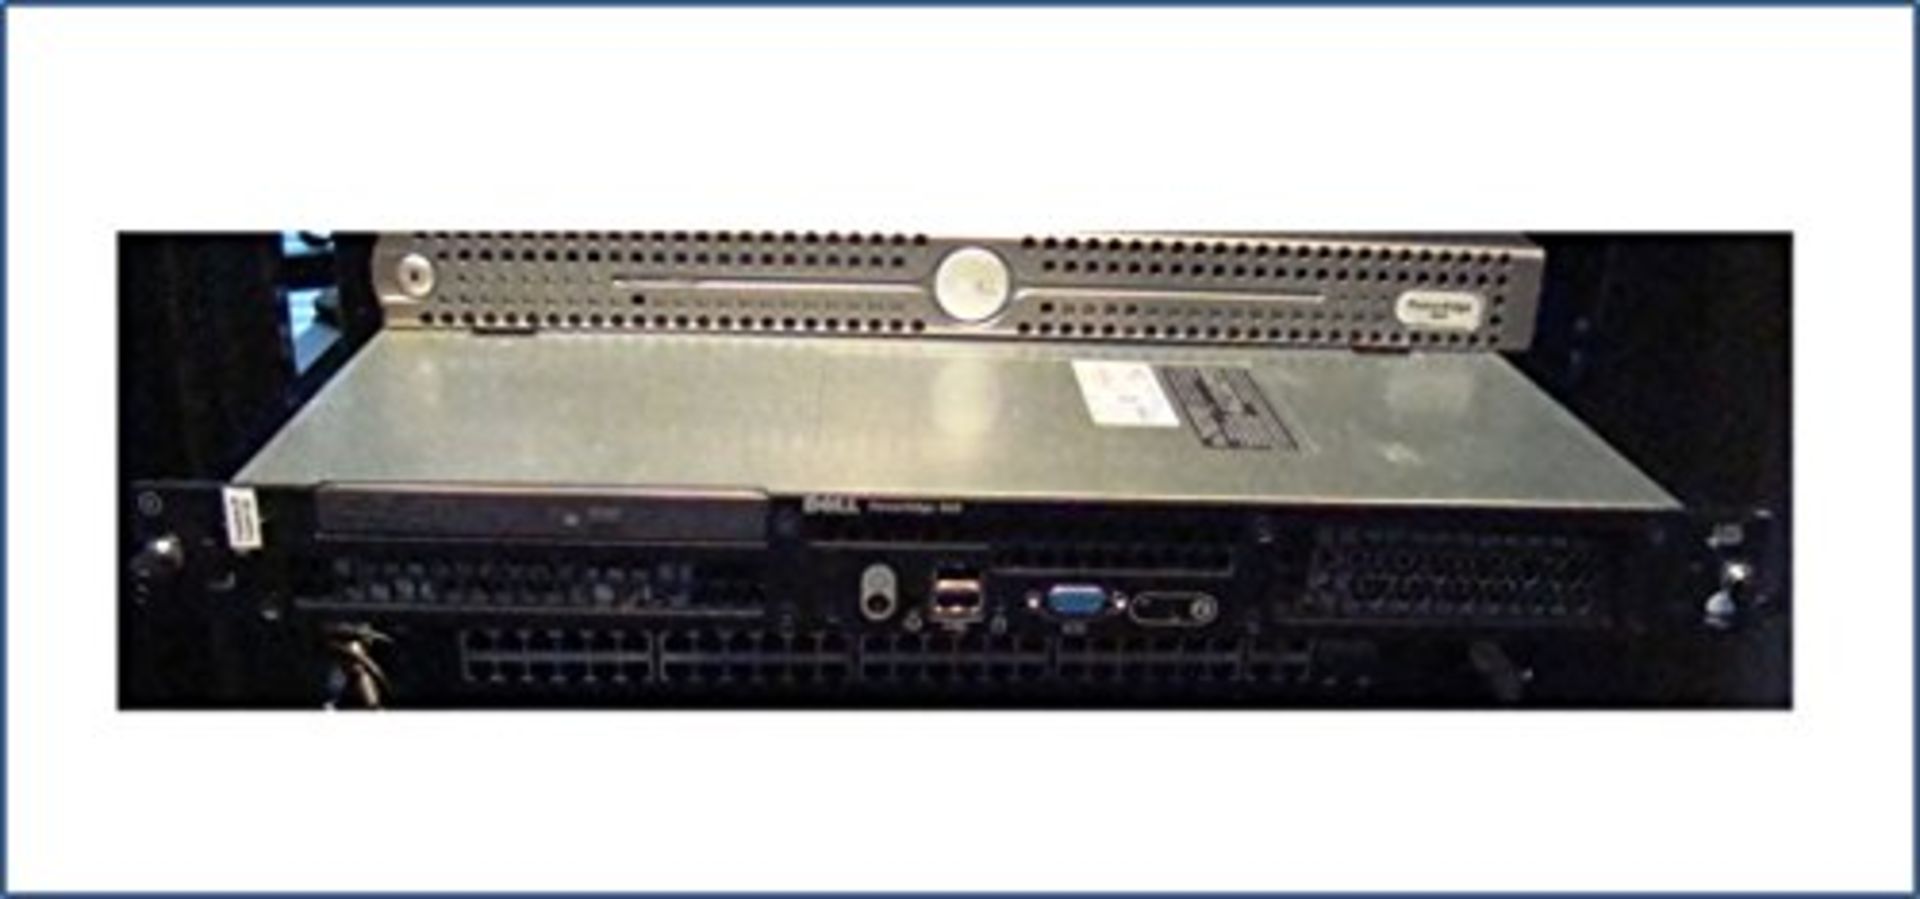 Dell PowerEdge 860 4 * 2.4Ghz CPU, 64 Bit, 4GB Memory DDR2 SDRAM - ECC + 1 integrated * 2T - Image 5 of 7